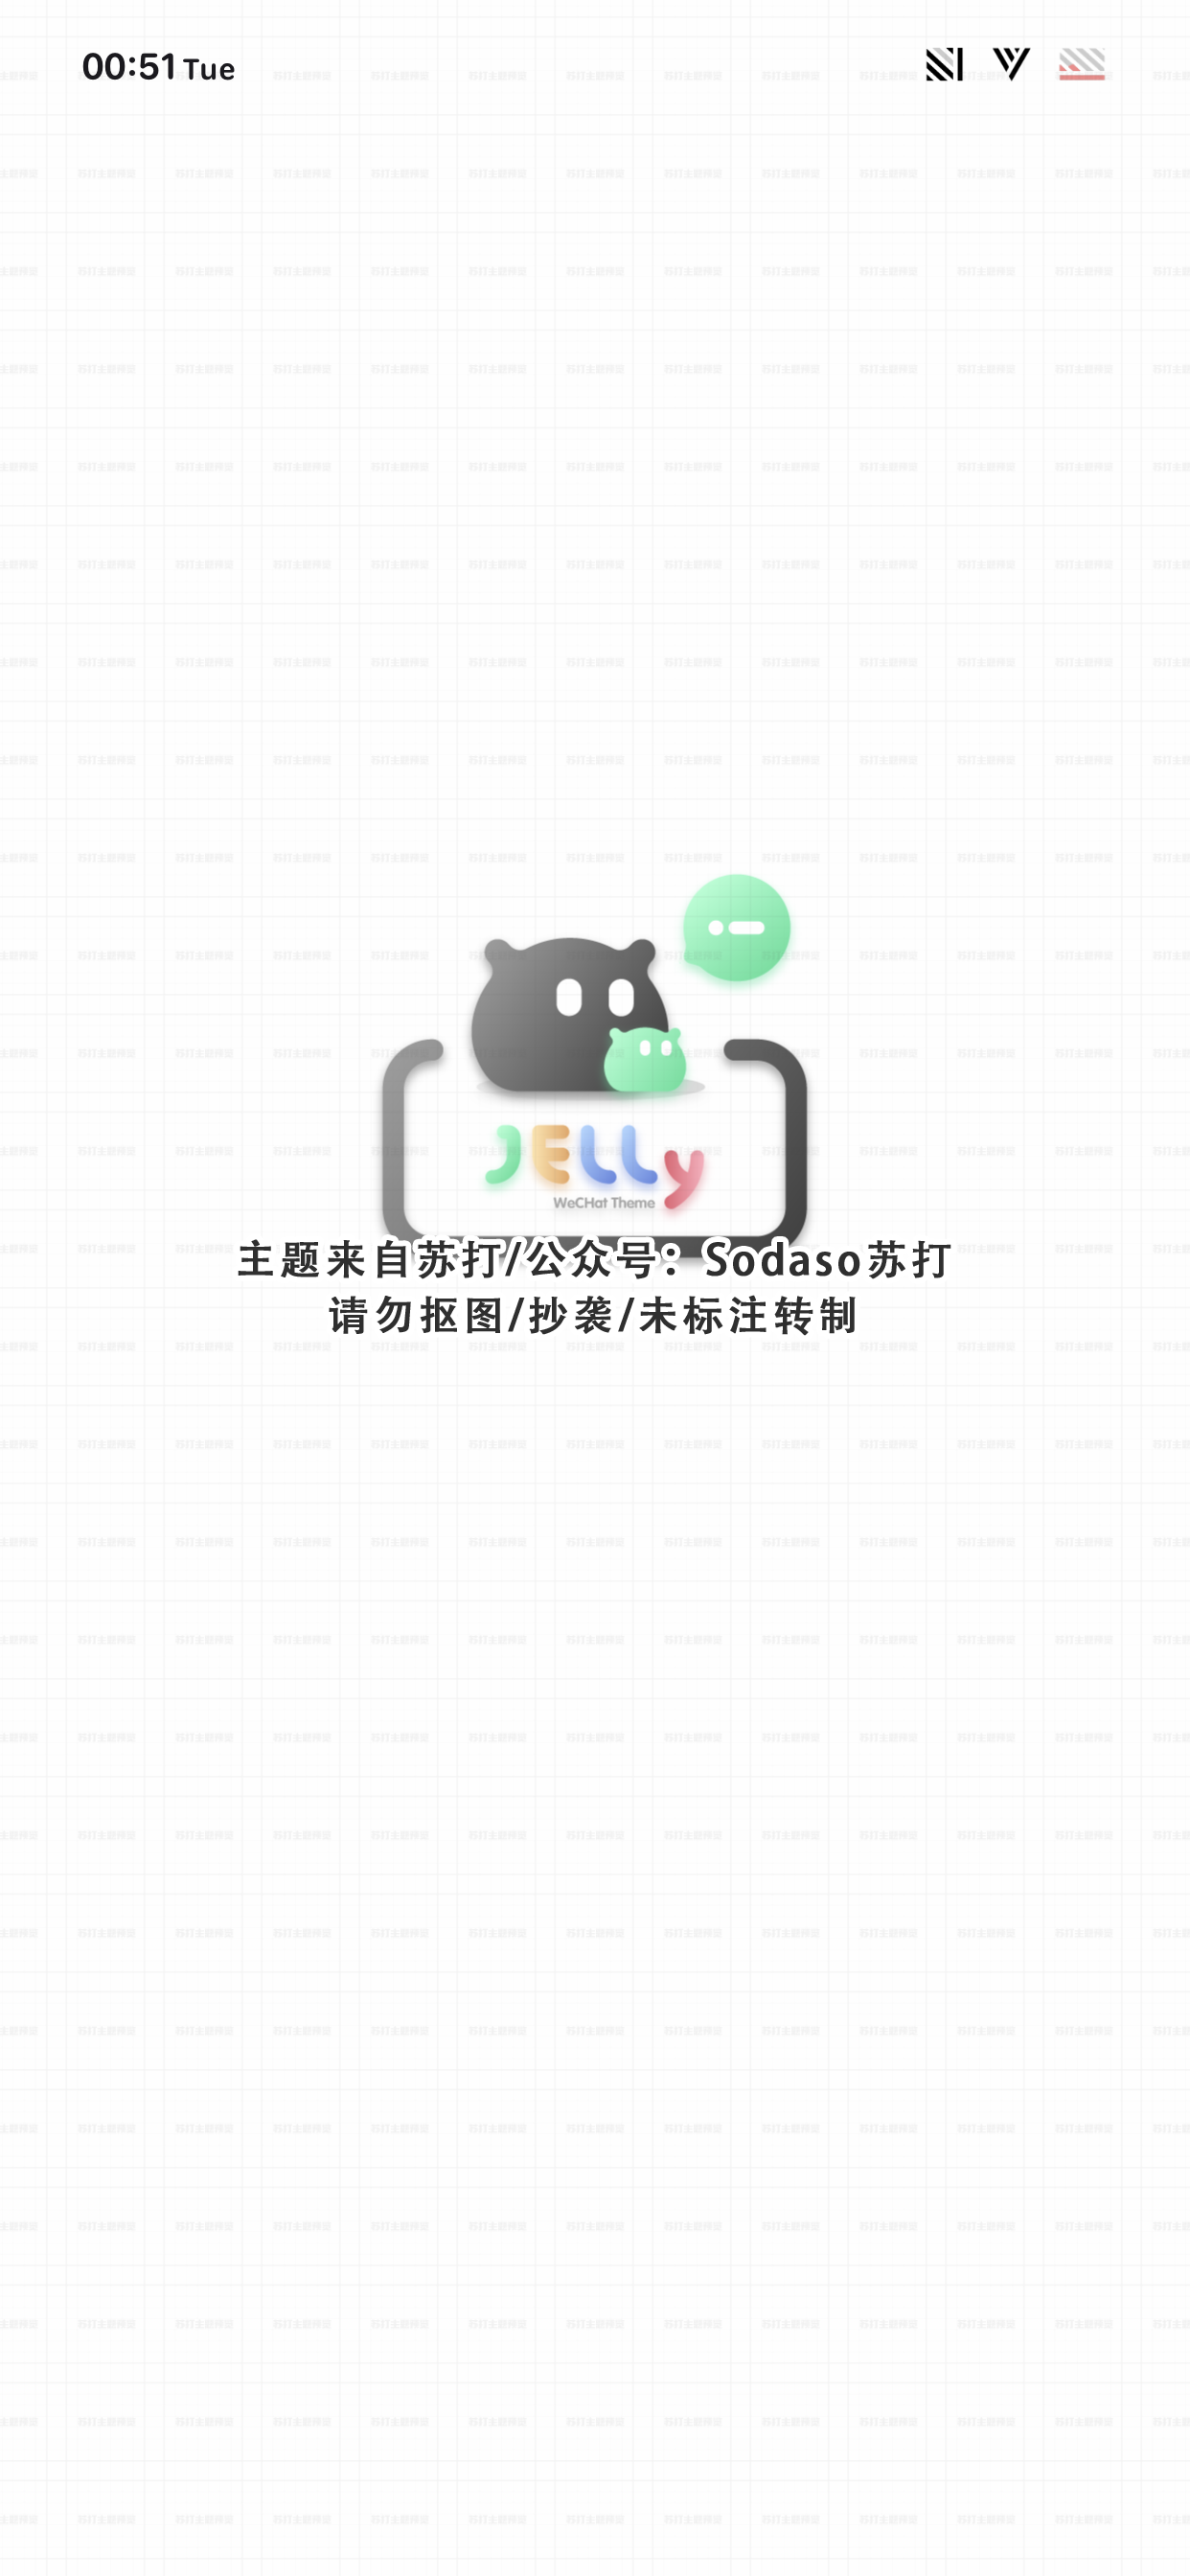 Jelly WeChatTheme（微信主题） - 1.1